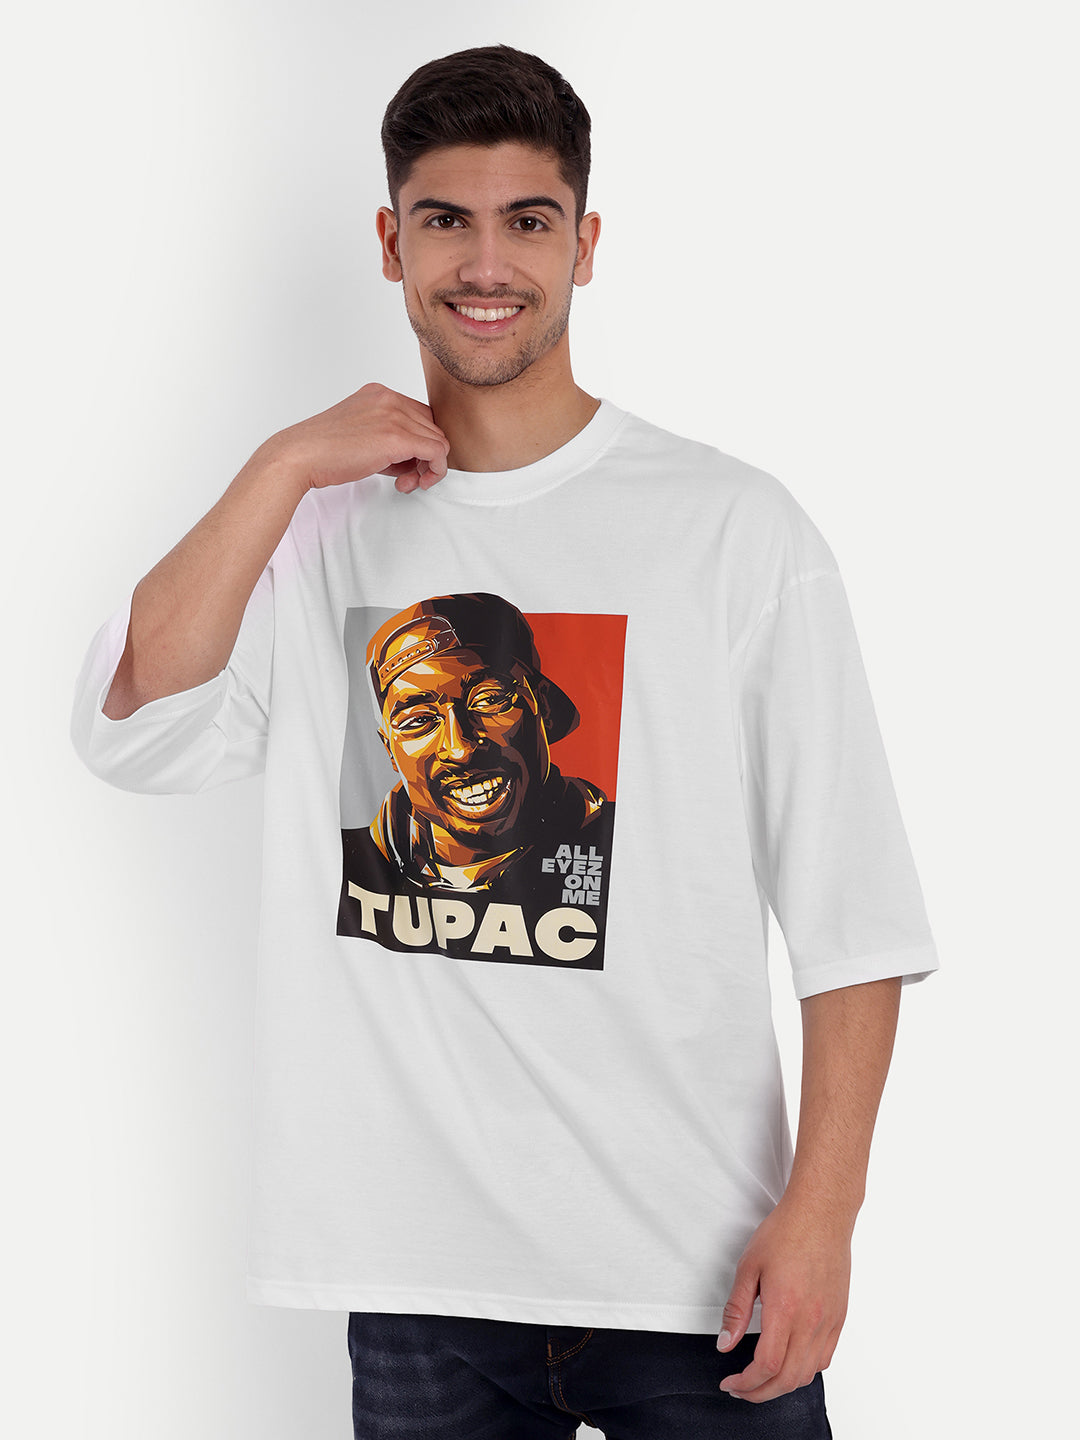 Tupac White Oversized Tee by Gavin Paris